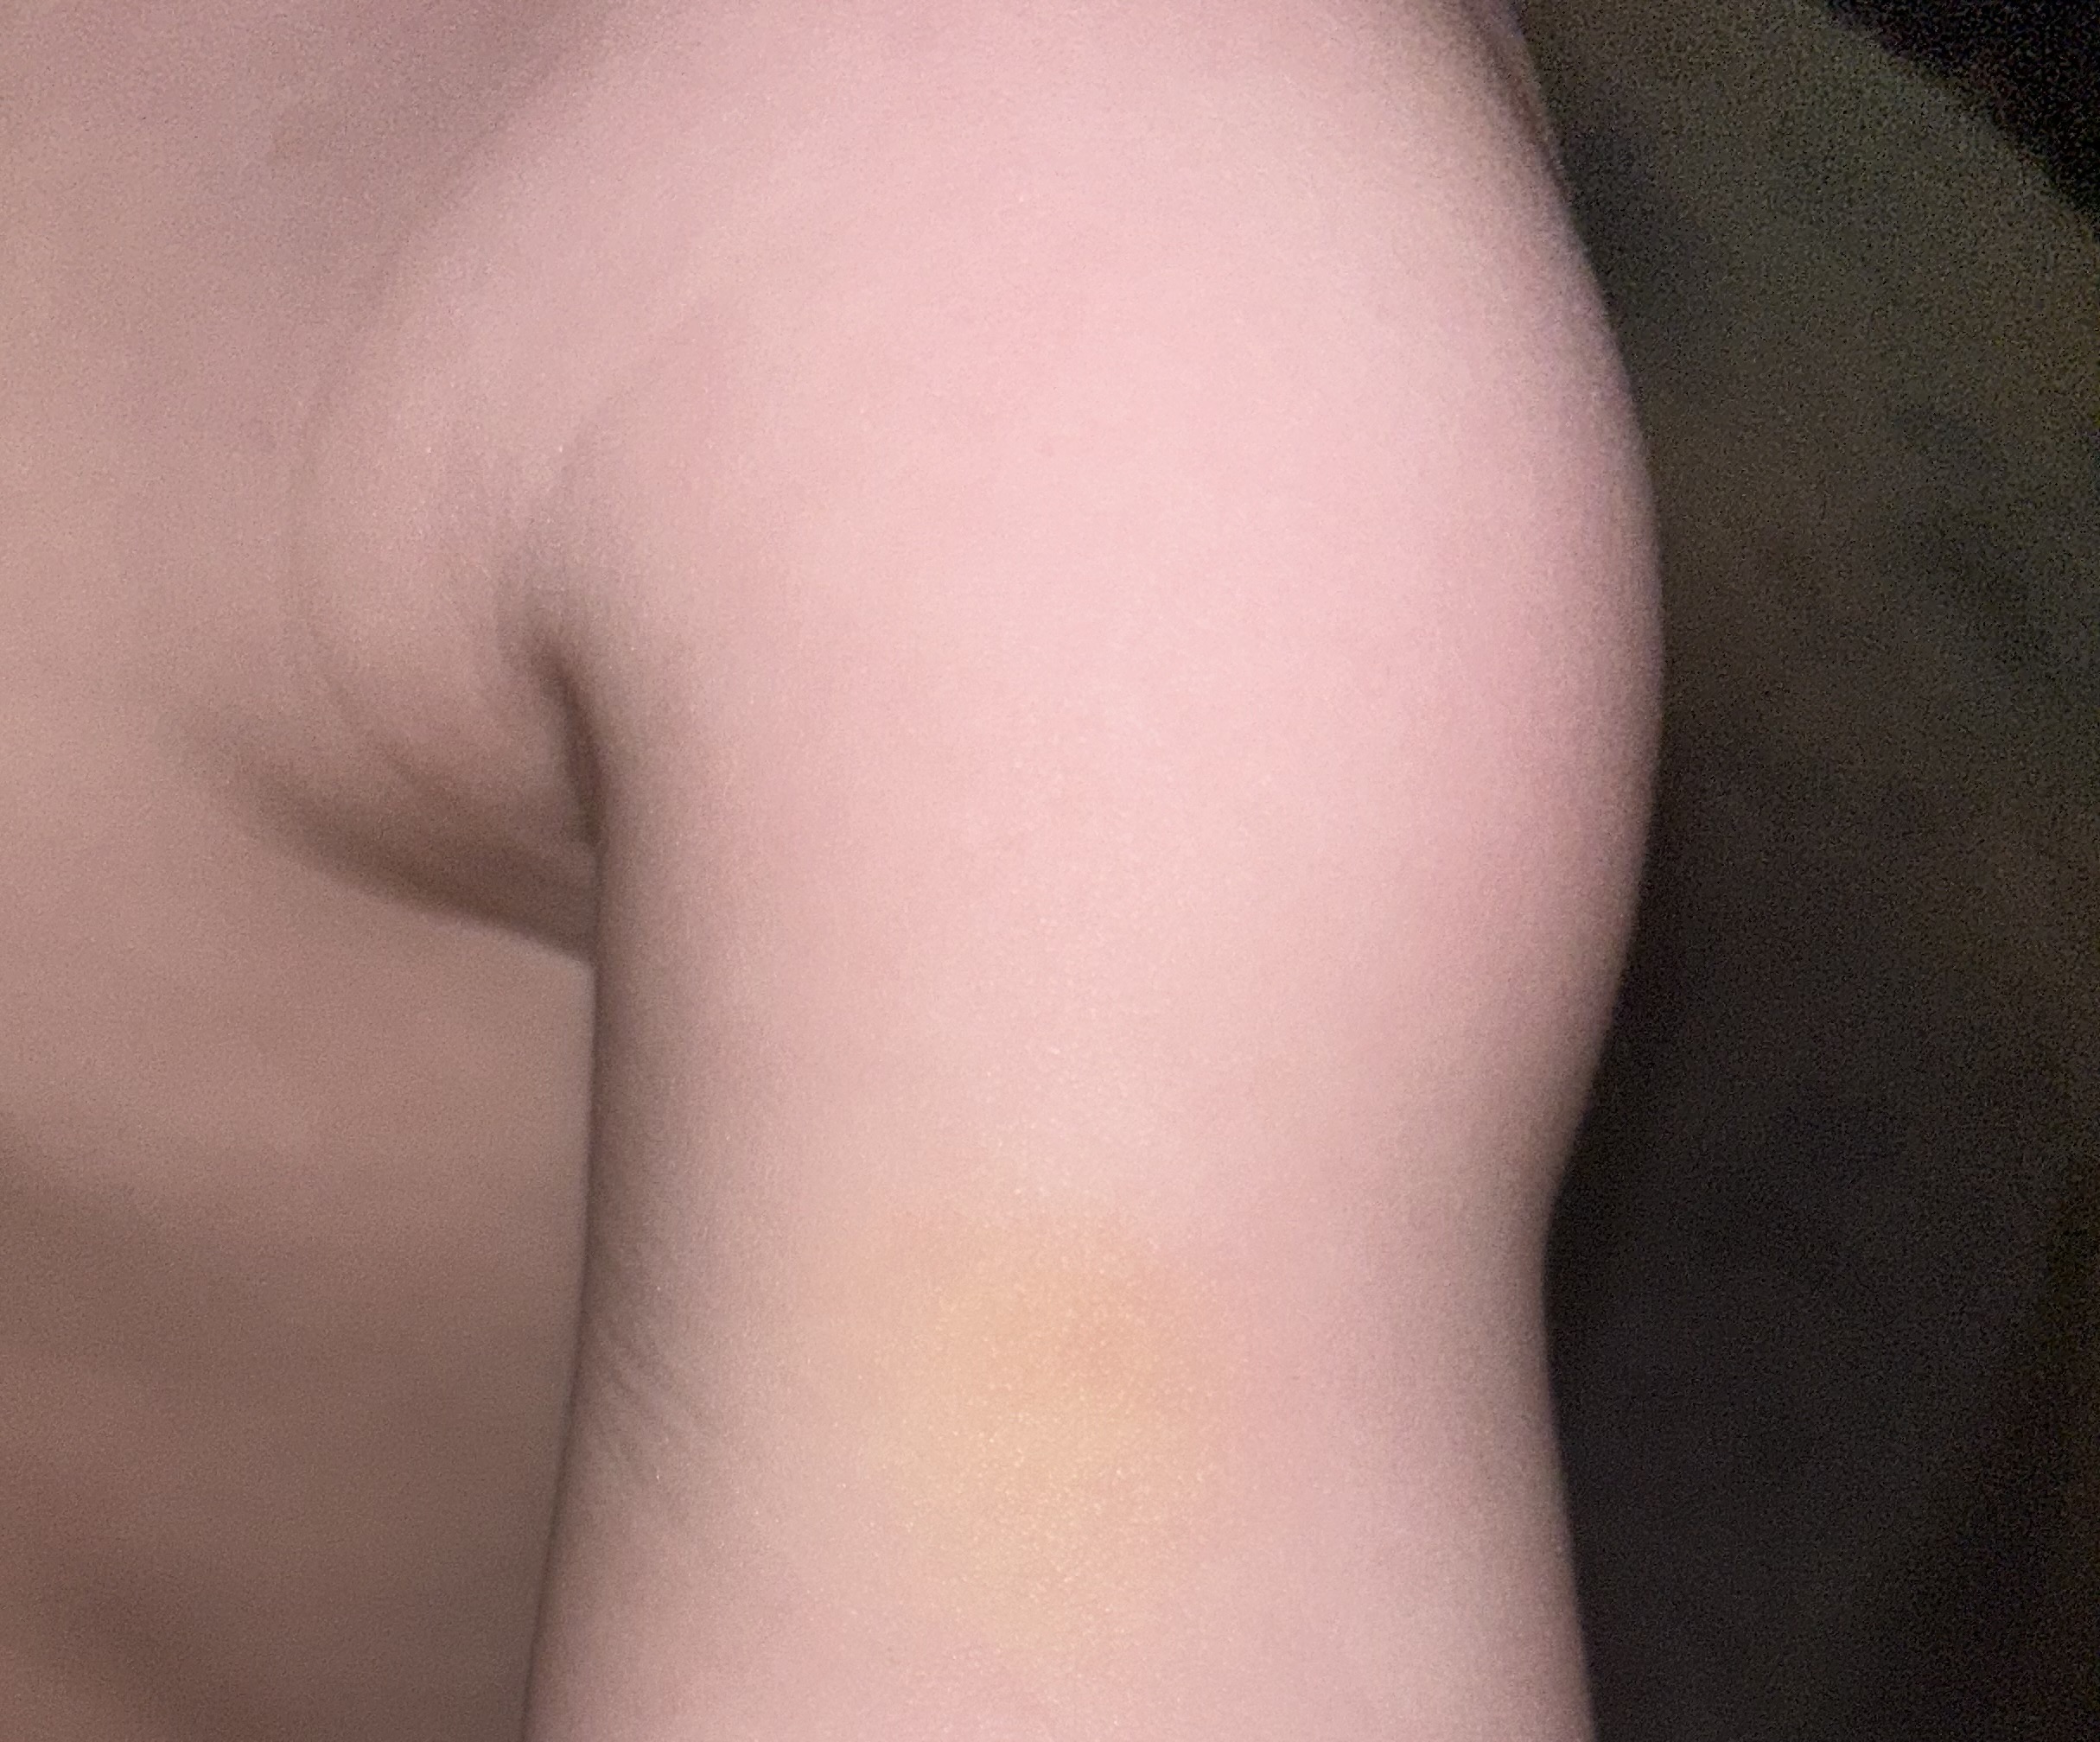 bruise on upper arm